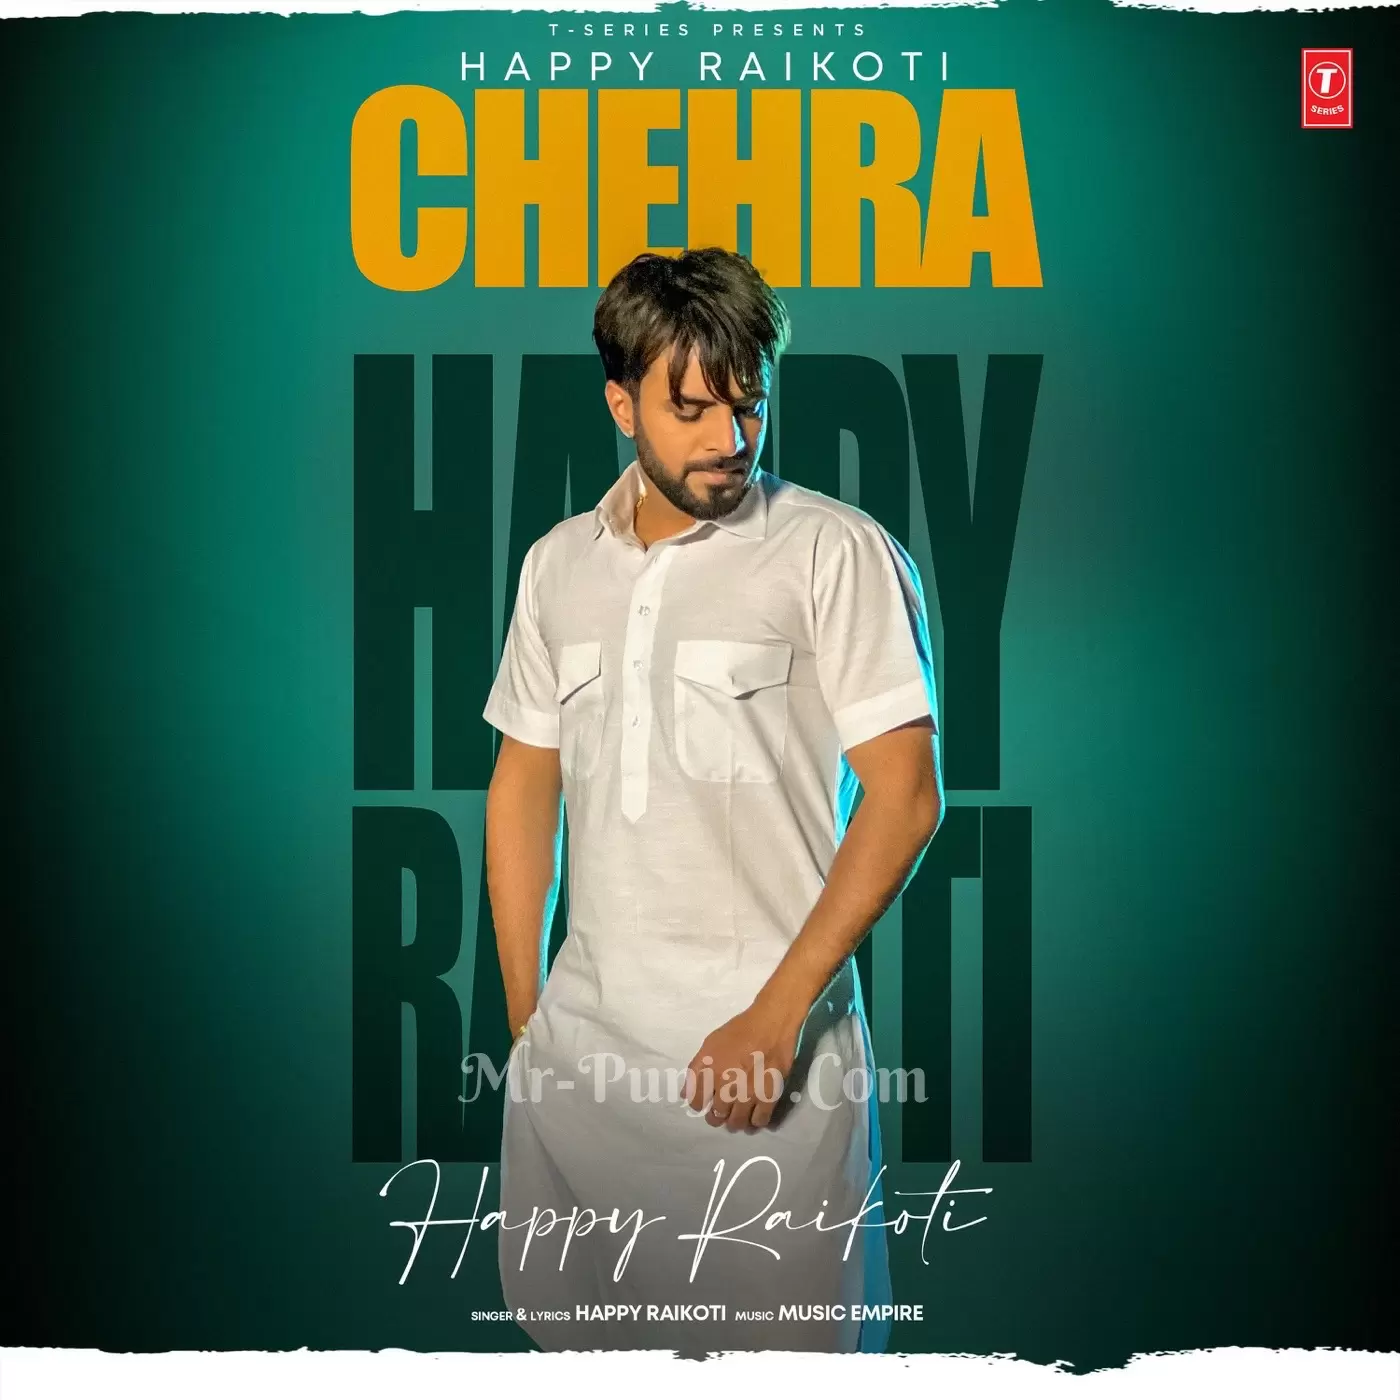 Chehra Happy Raikoti Mp3 Download Song - Mr-Punjab